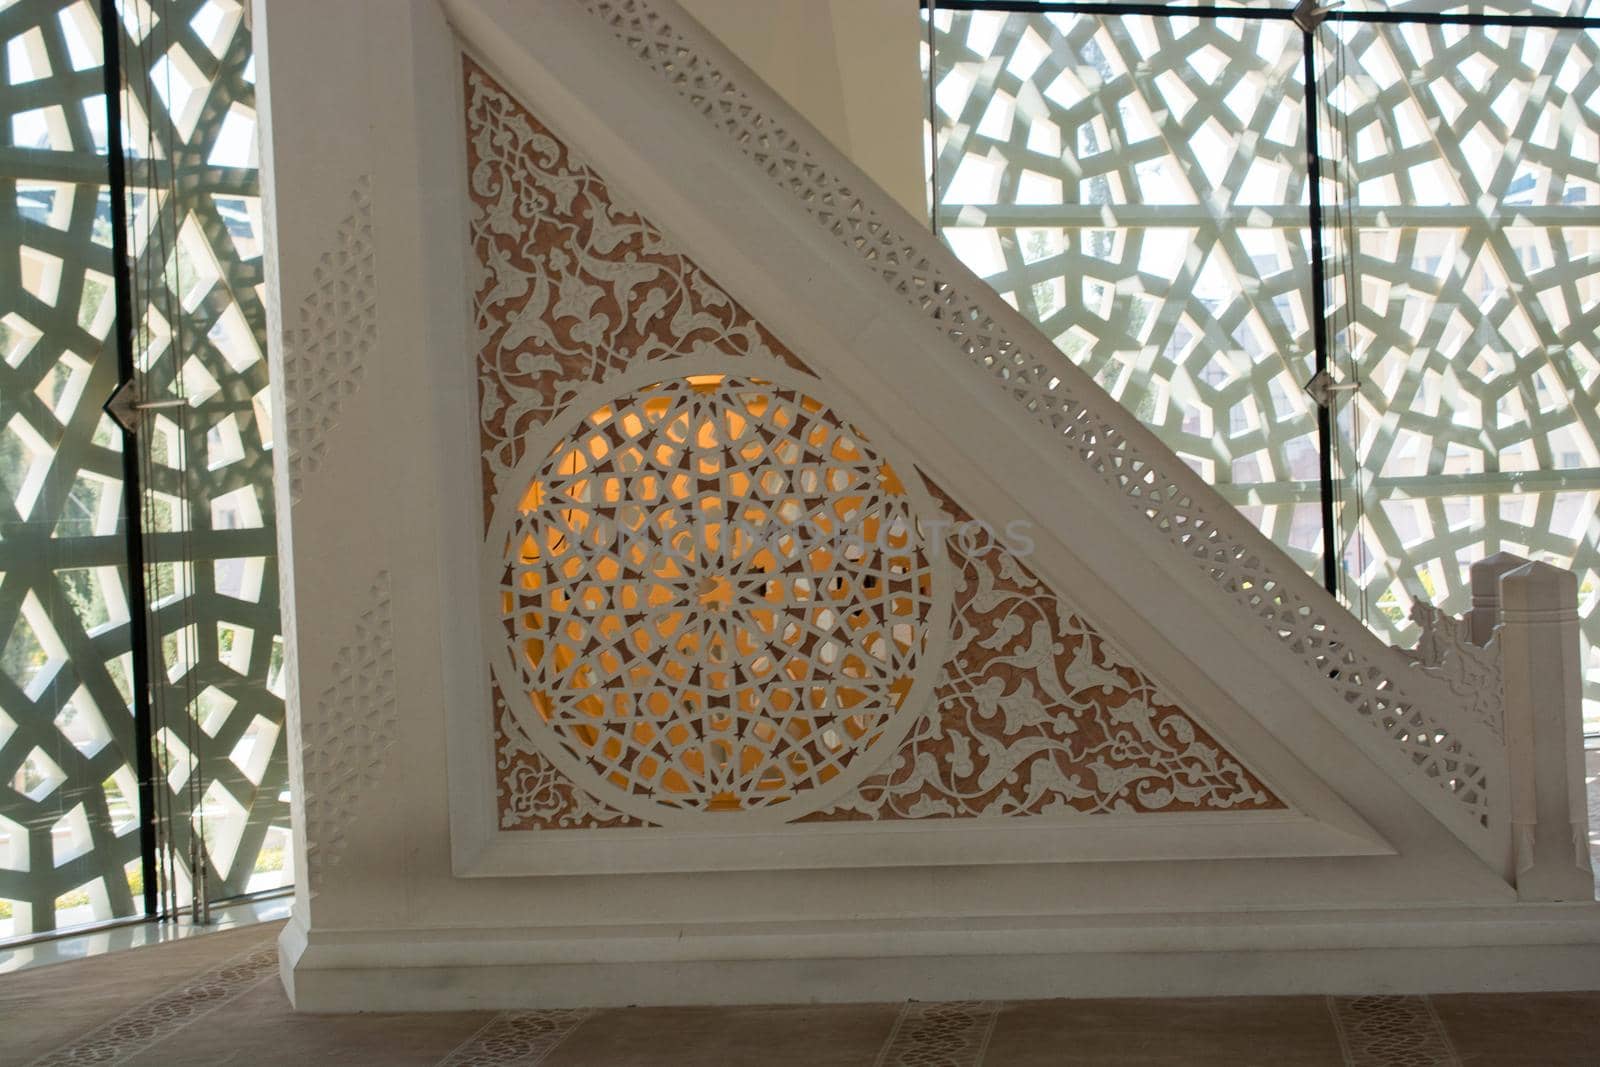 Example of Ottoman art patterns by berkay